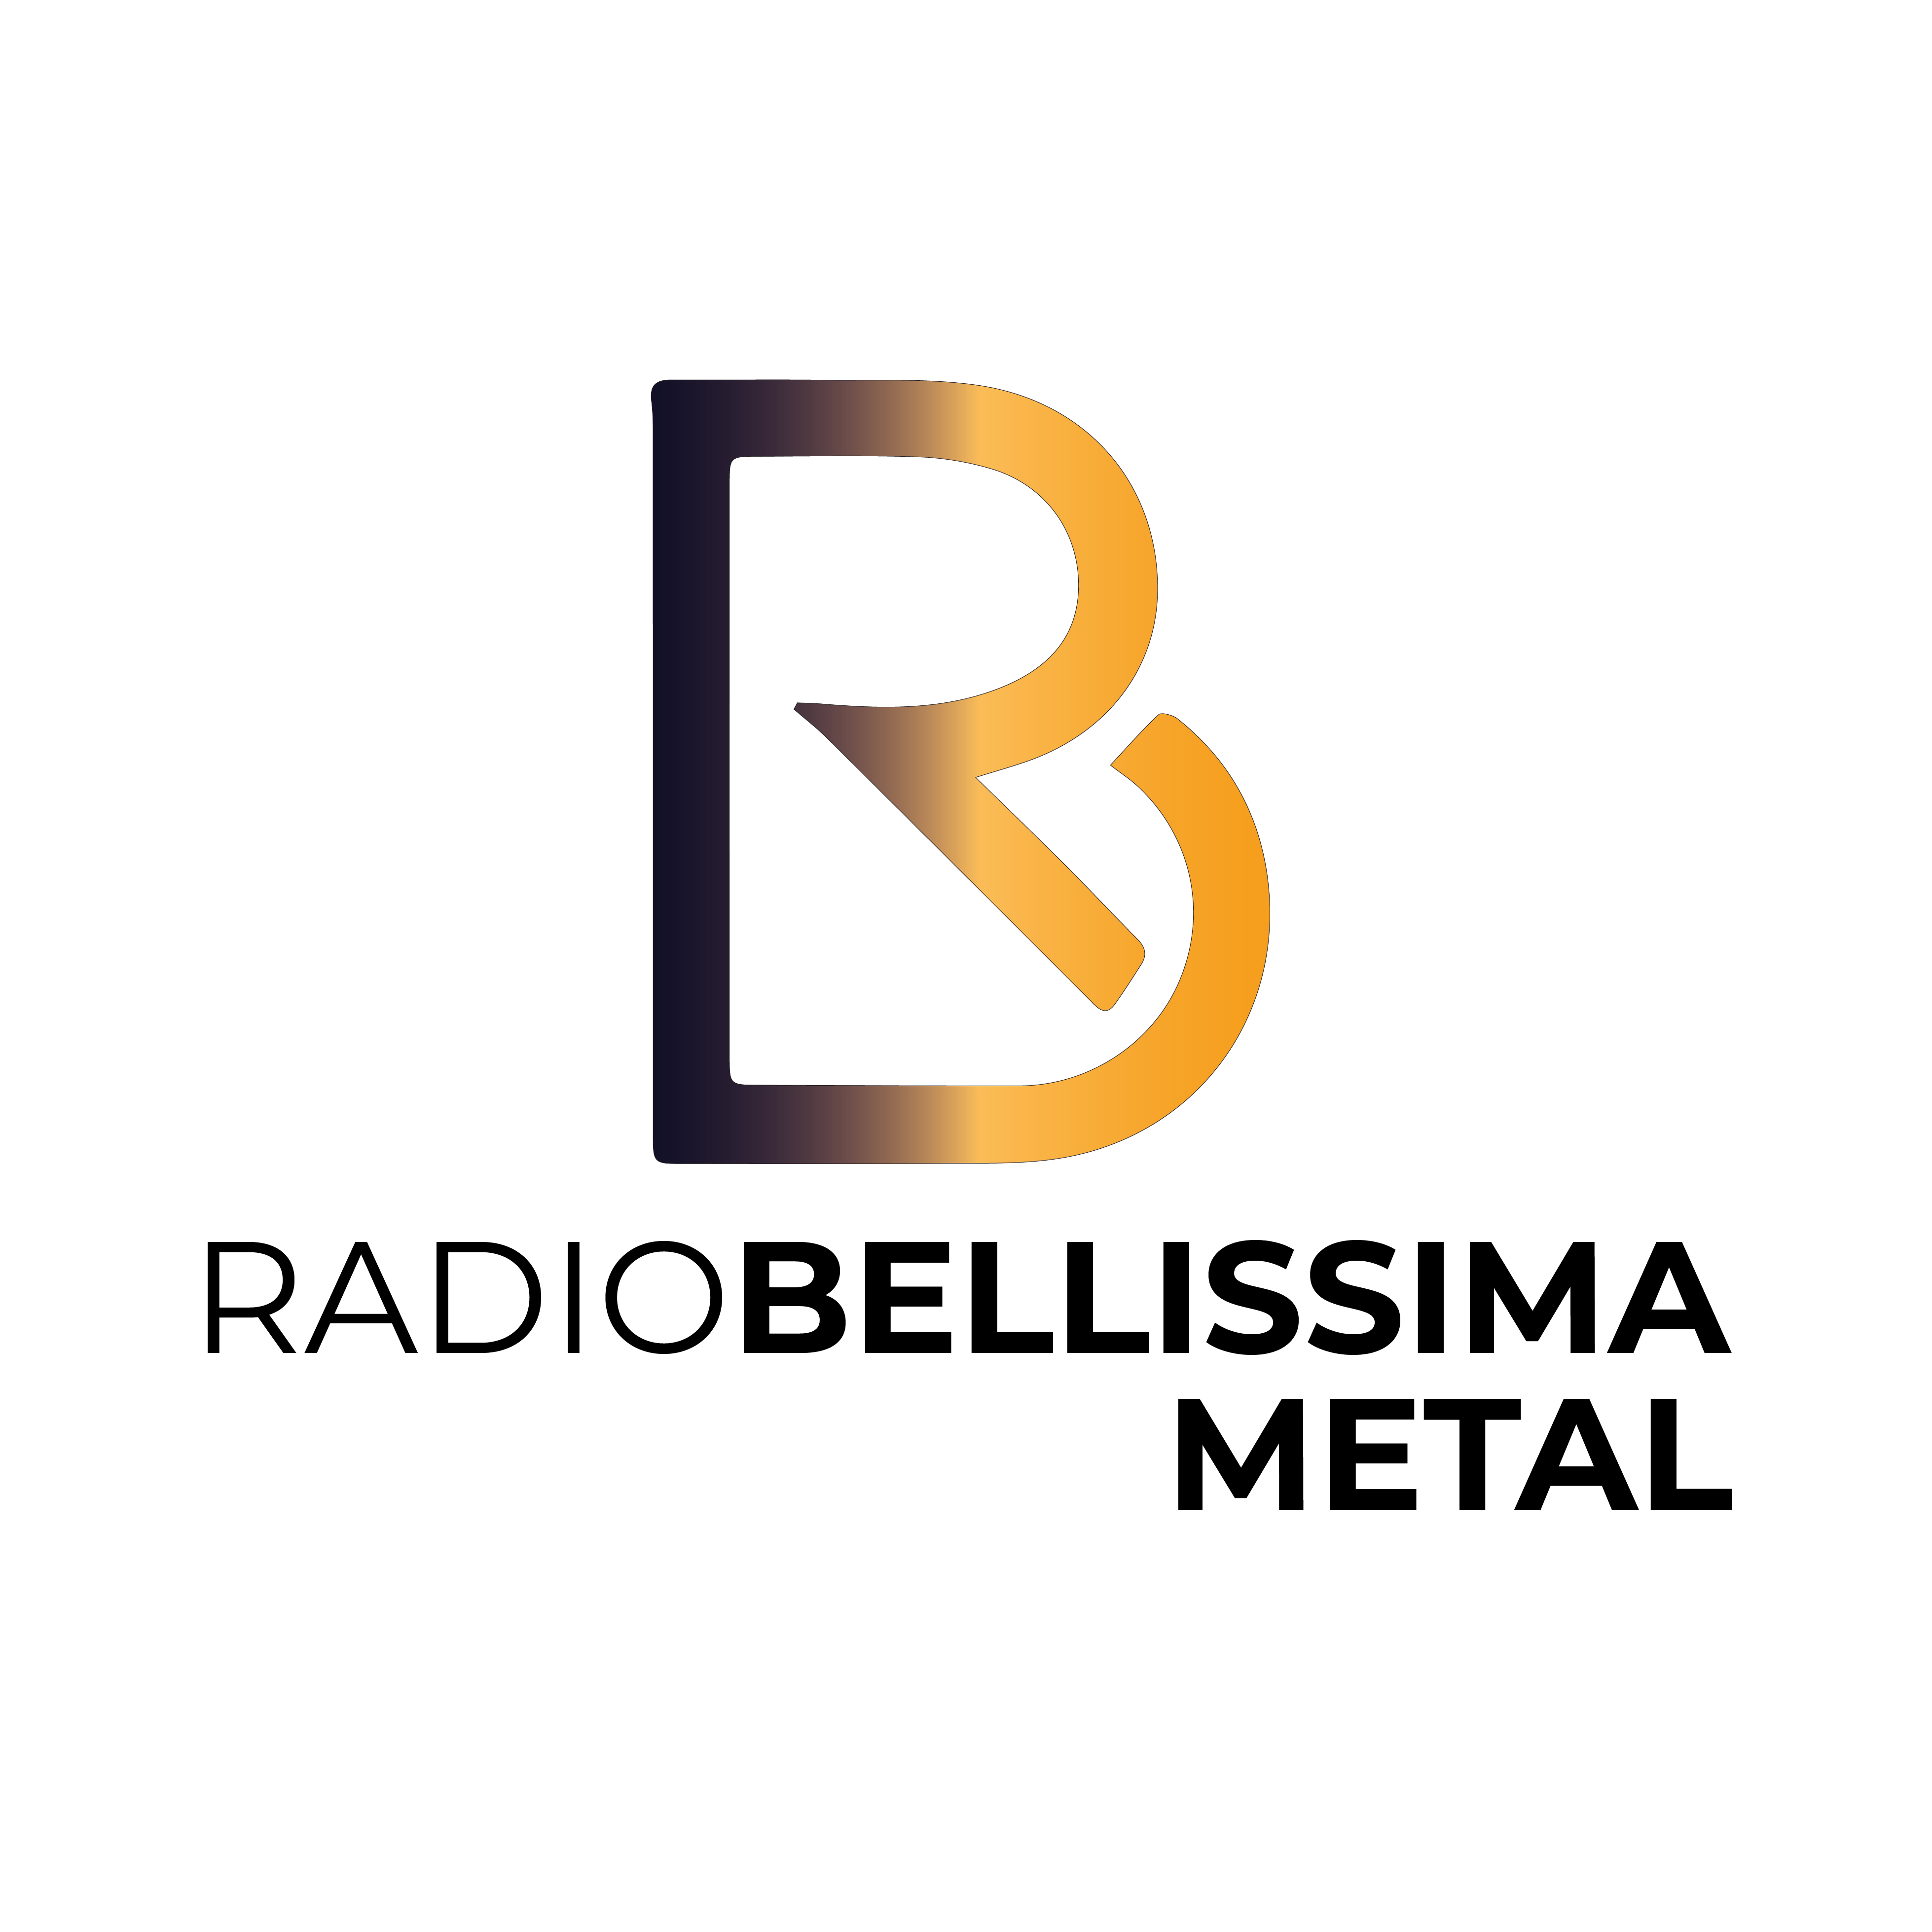 Bellissima Metal